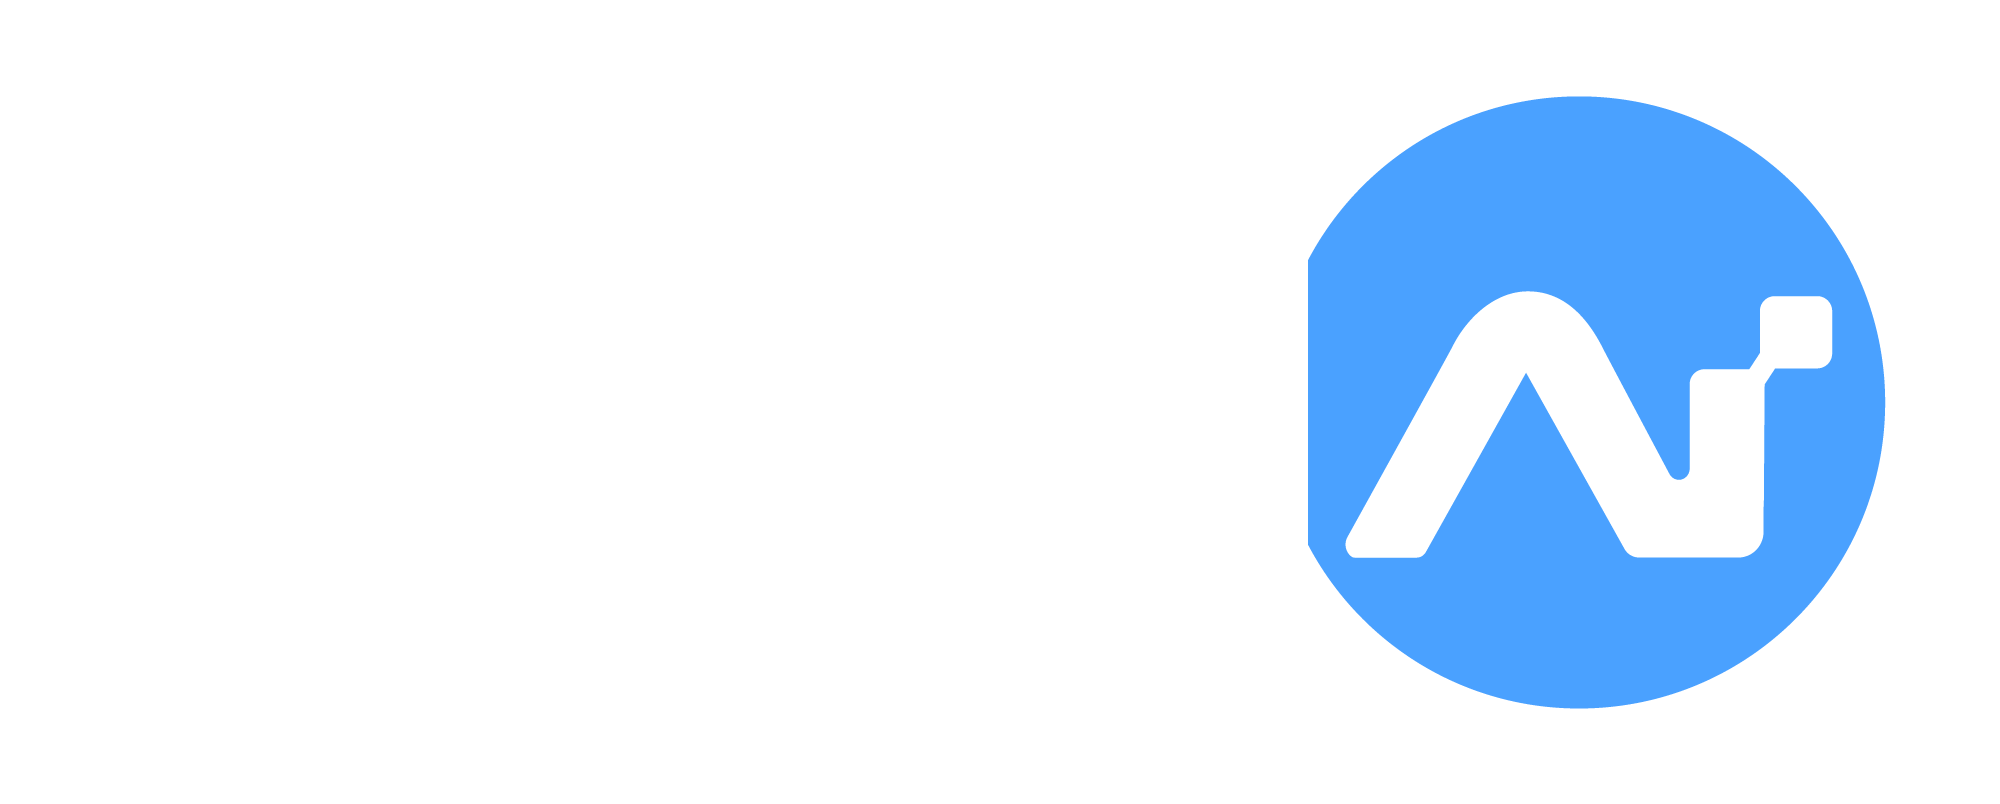 Pixel AI Technologies